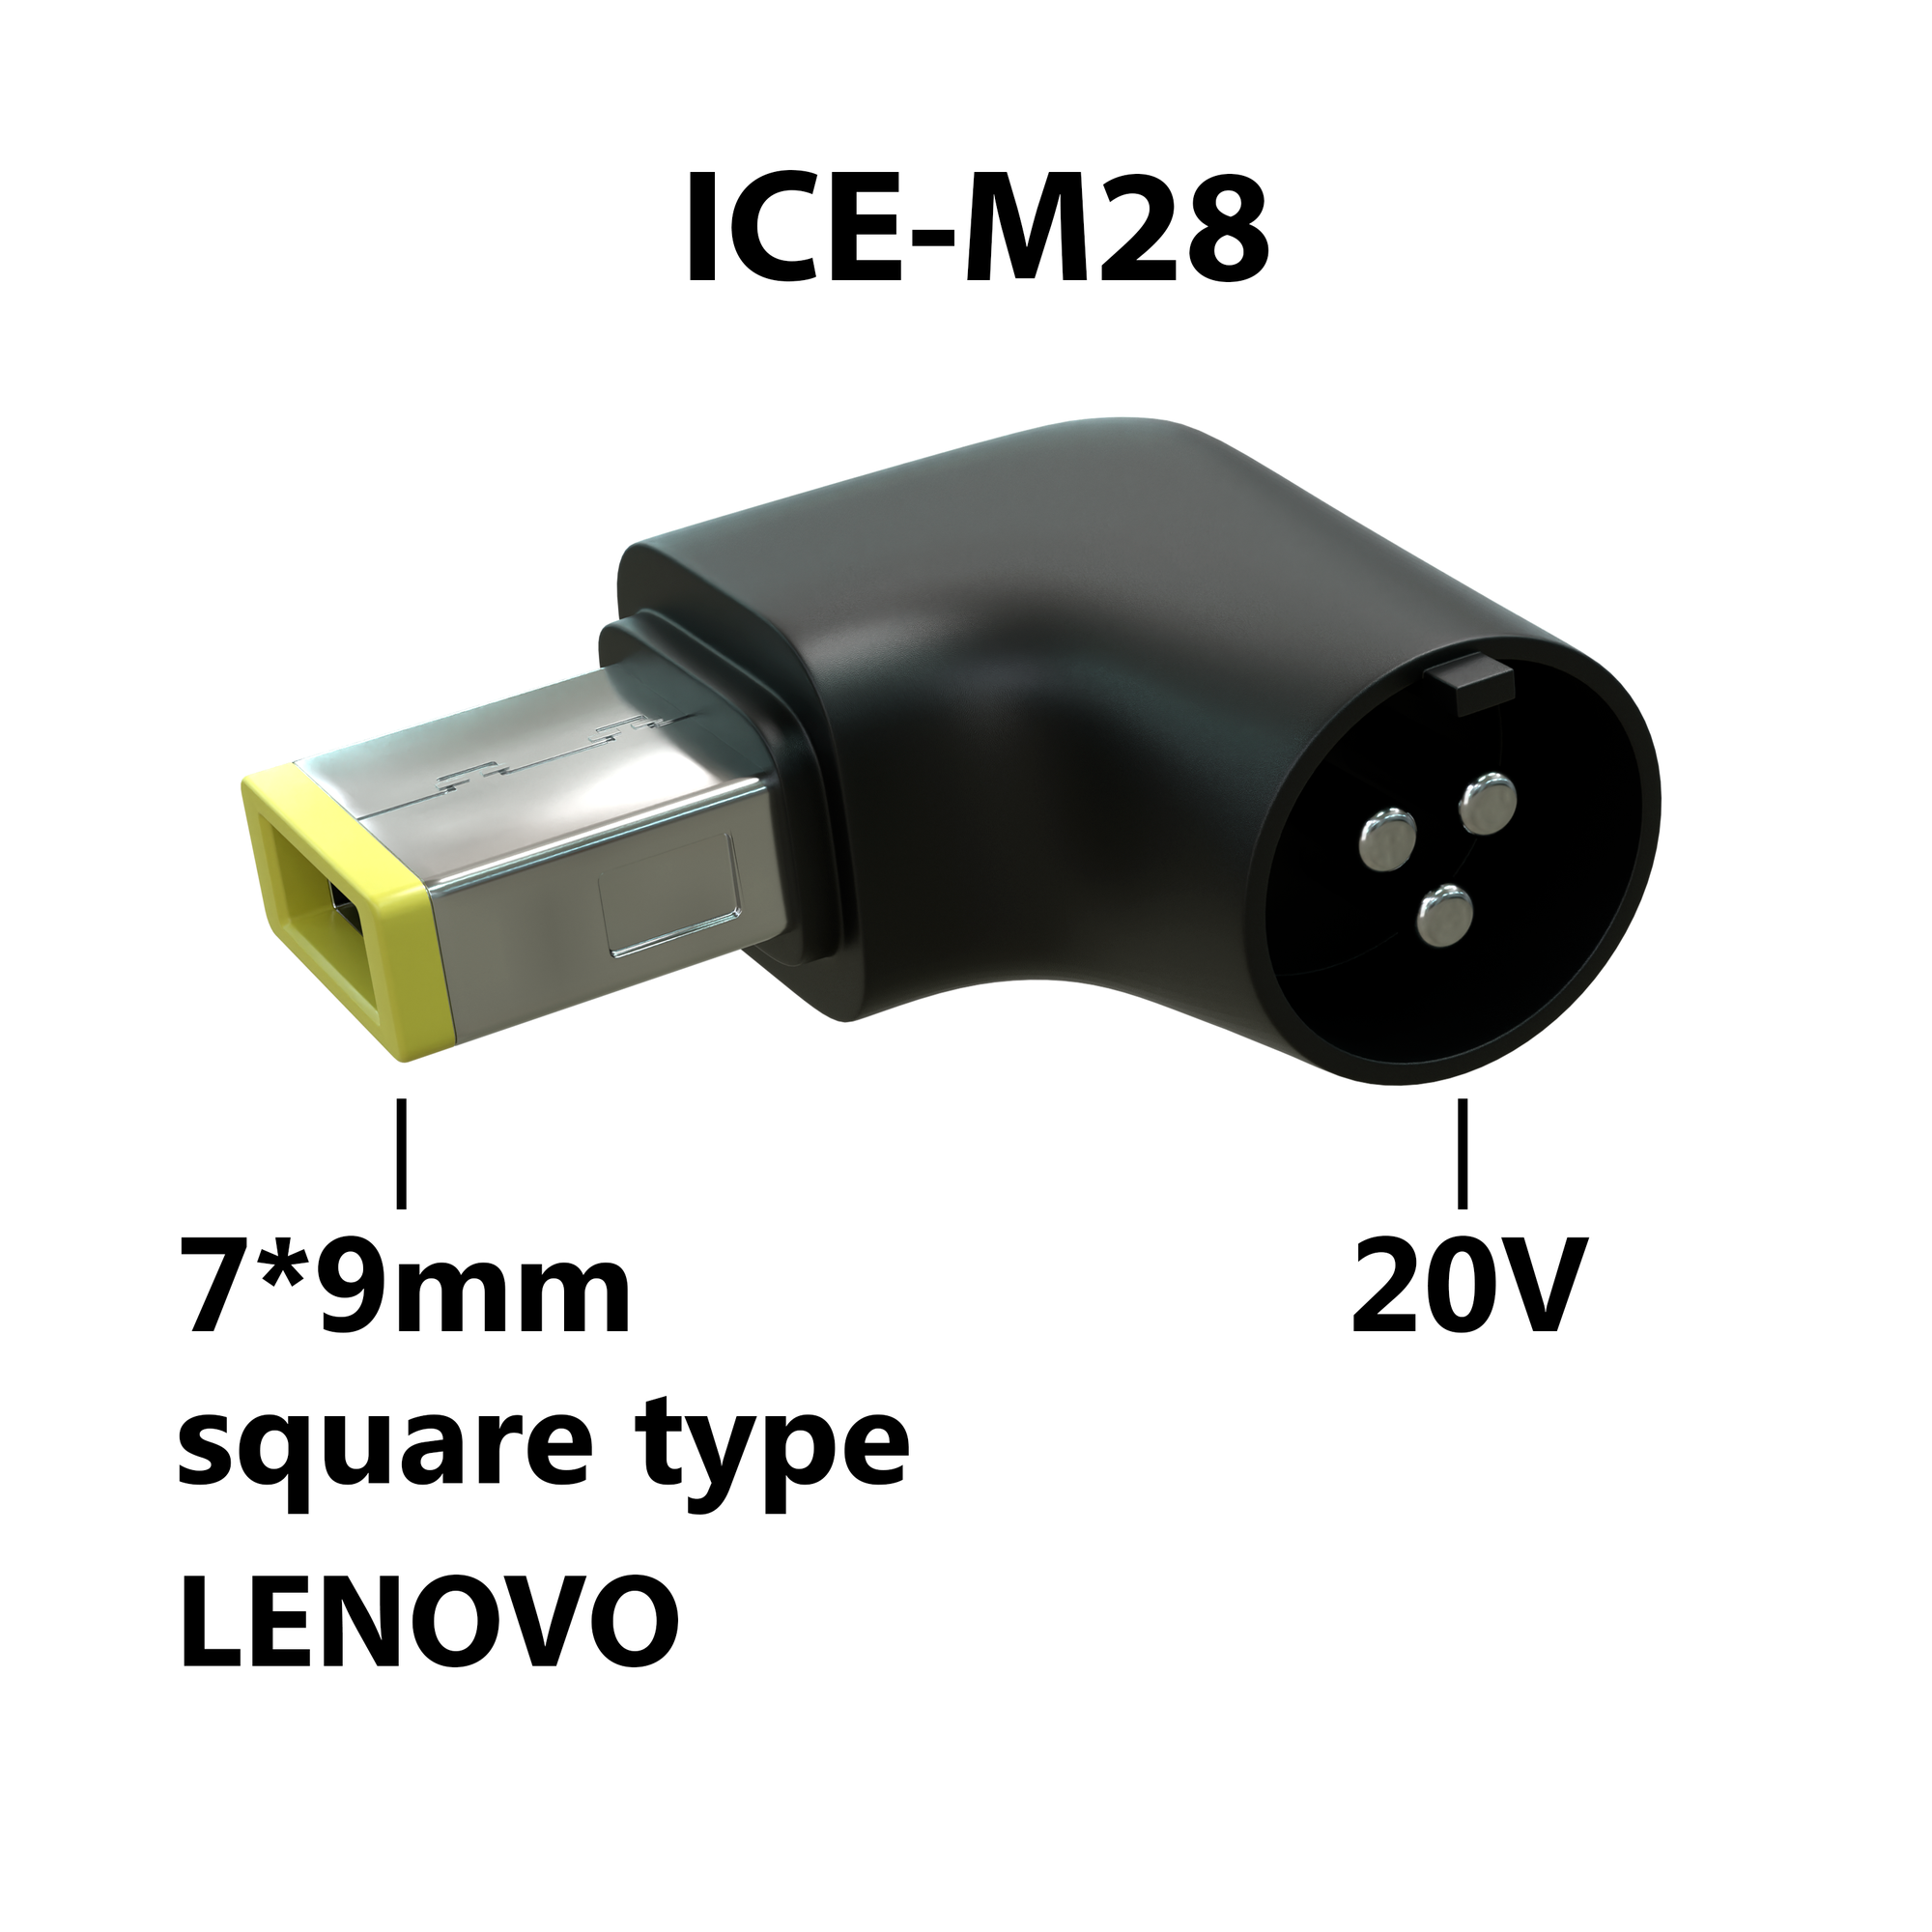 Коннектор адаптер переходник питания для ноутбуков Lenovo ICEPAD ICE-M28 гнездо 3 pin 20V - штекер square type 7*9 mm угловой